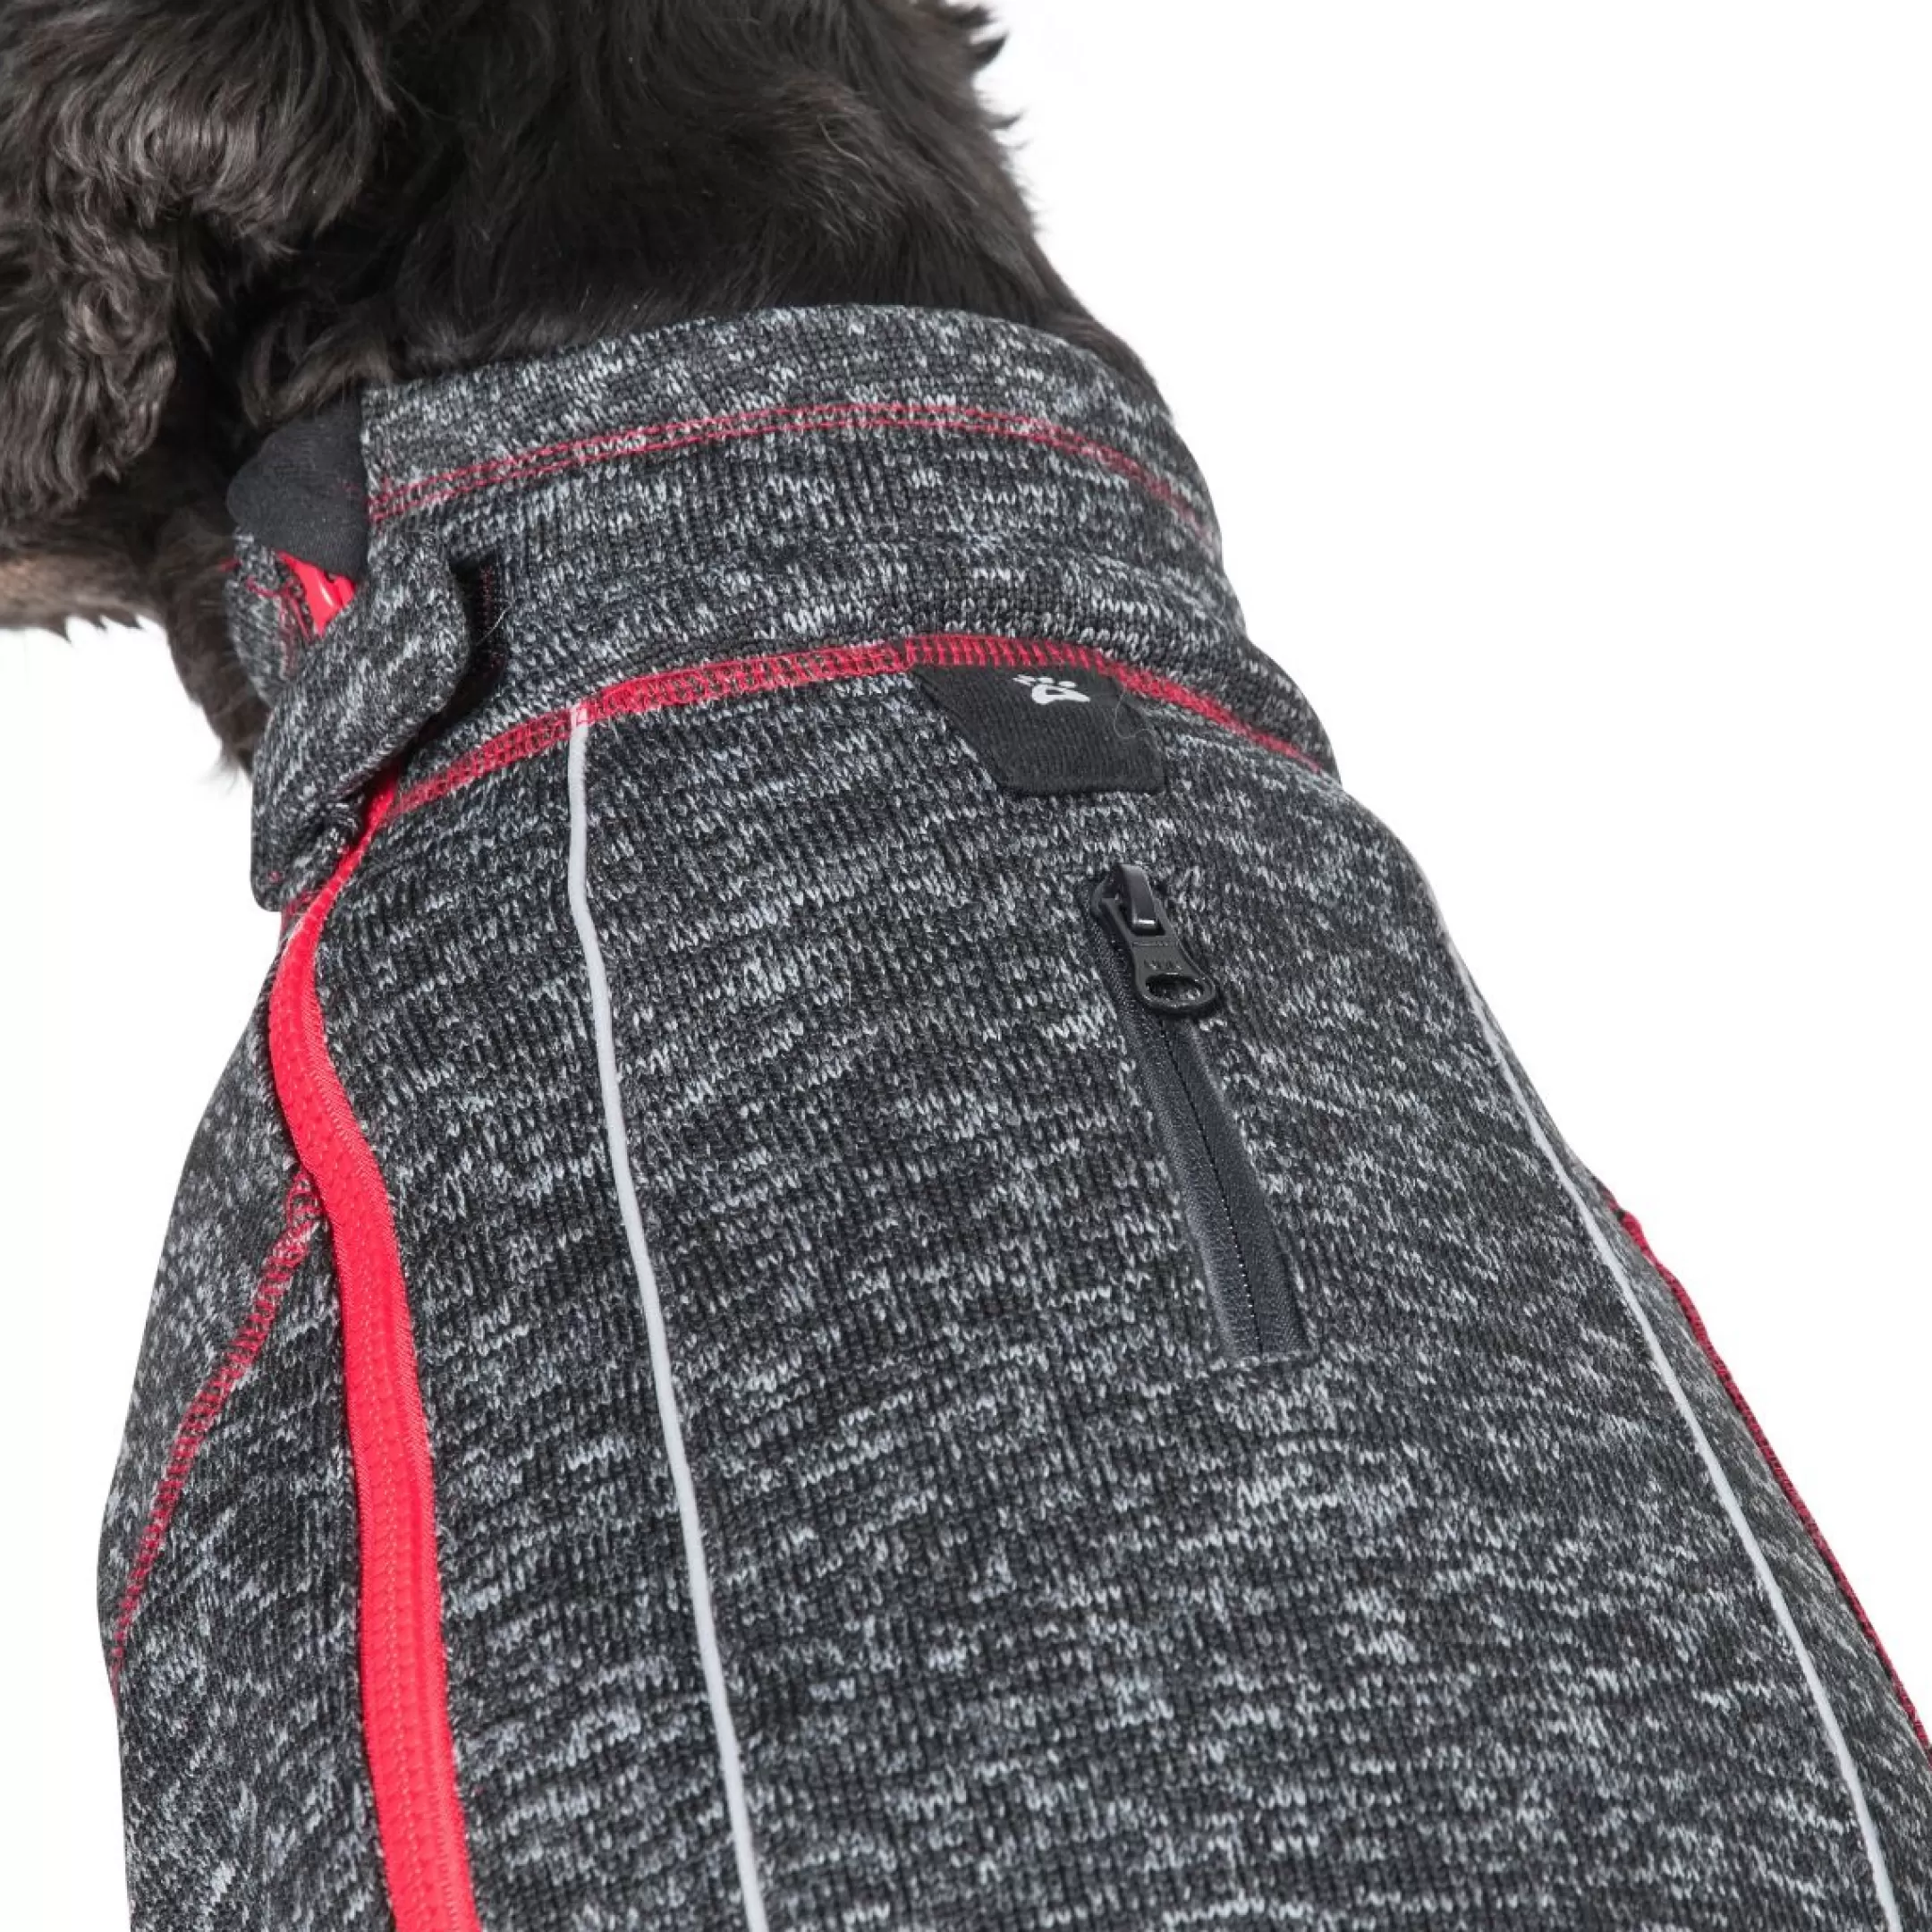 Trespaws Medium Windproof Dog Fleece AT300 in Black Melange Boomer | Trespass Flash Sale